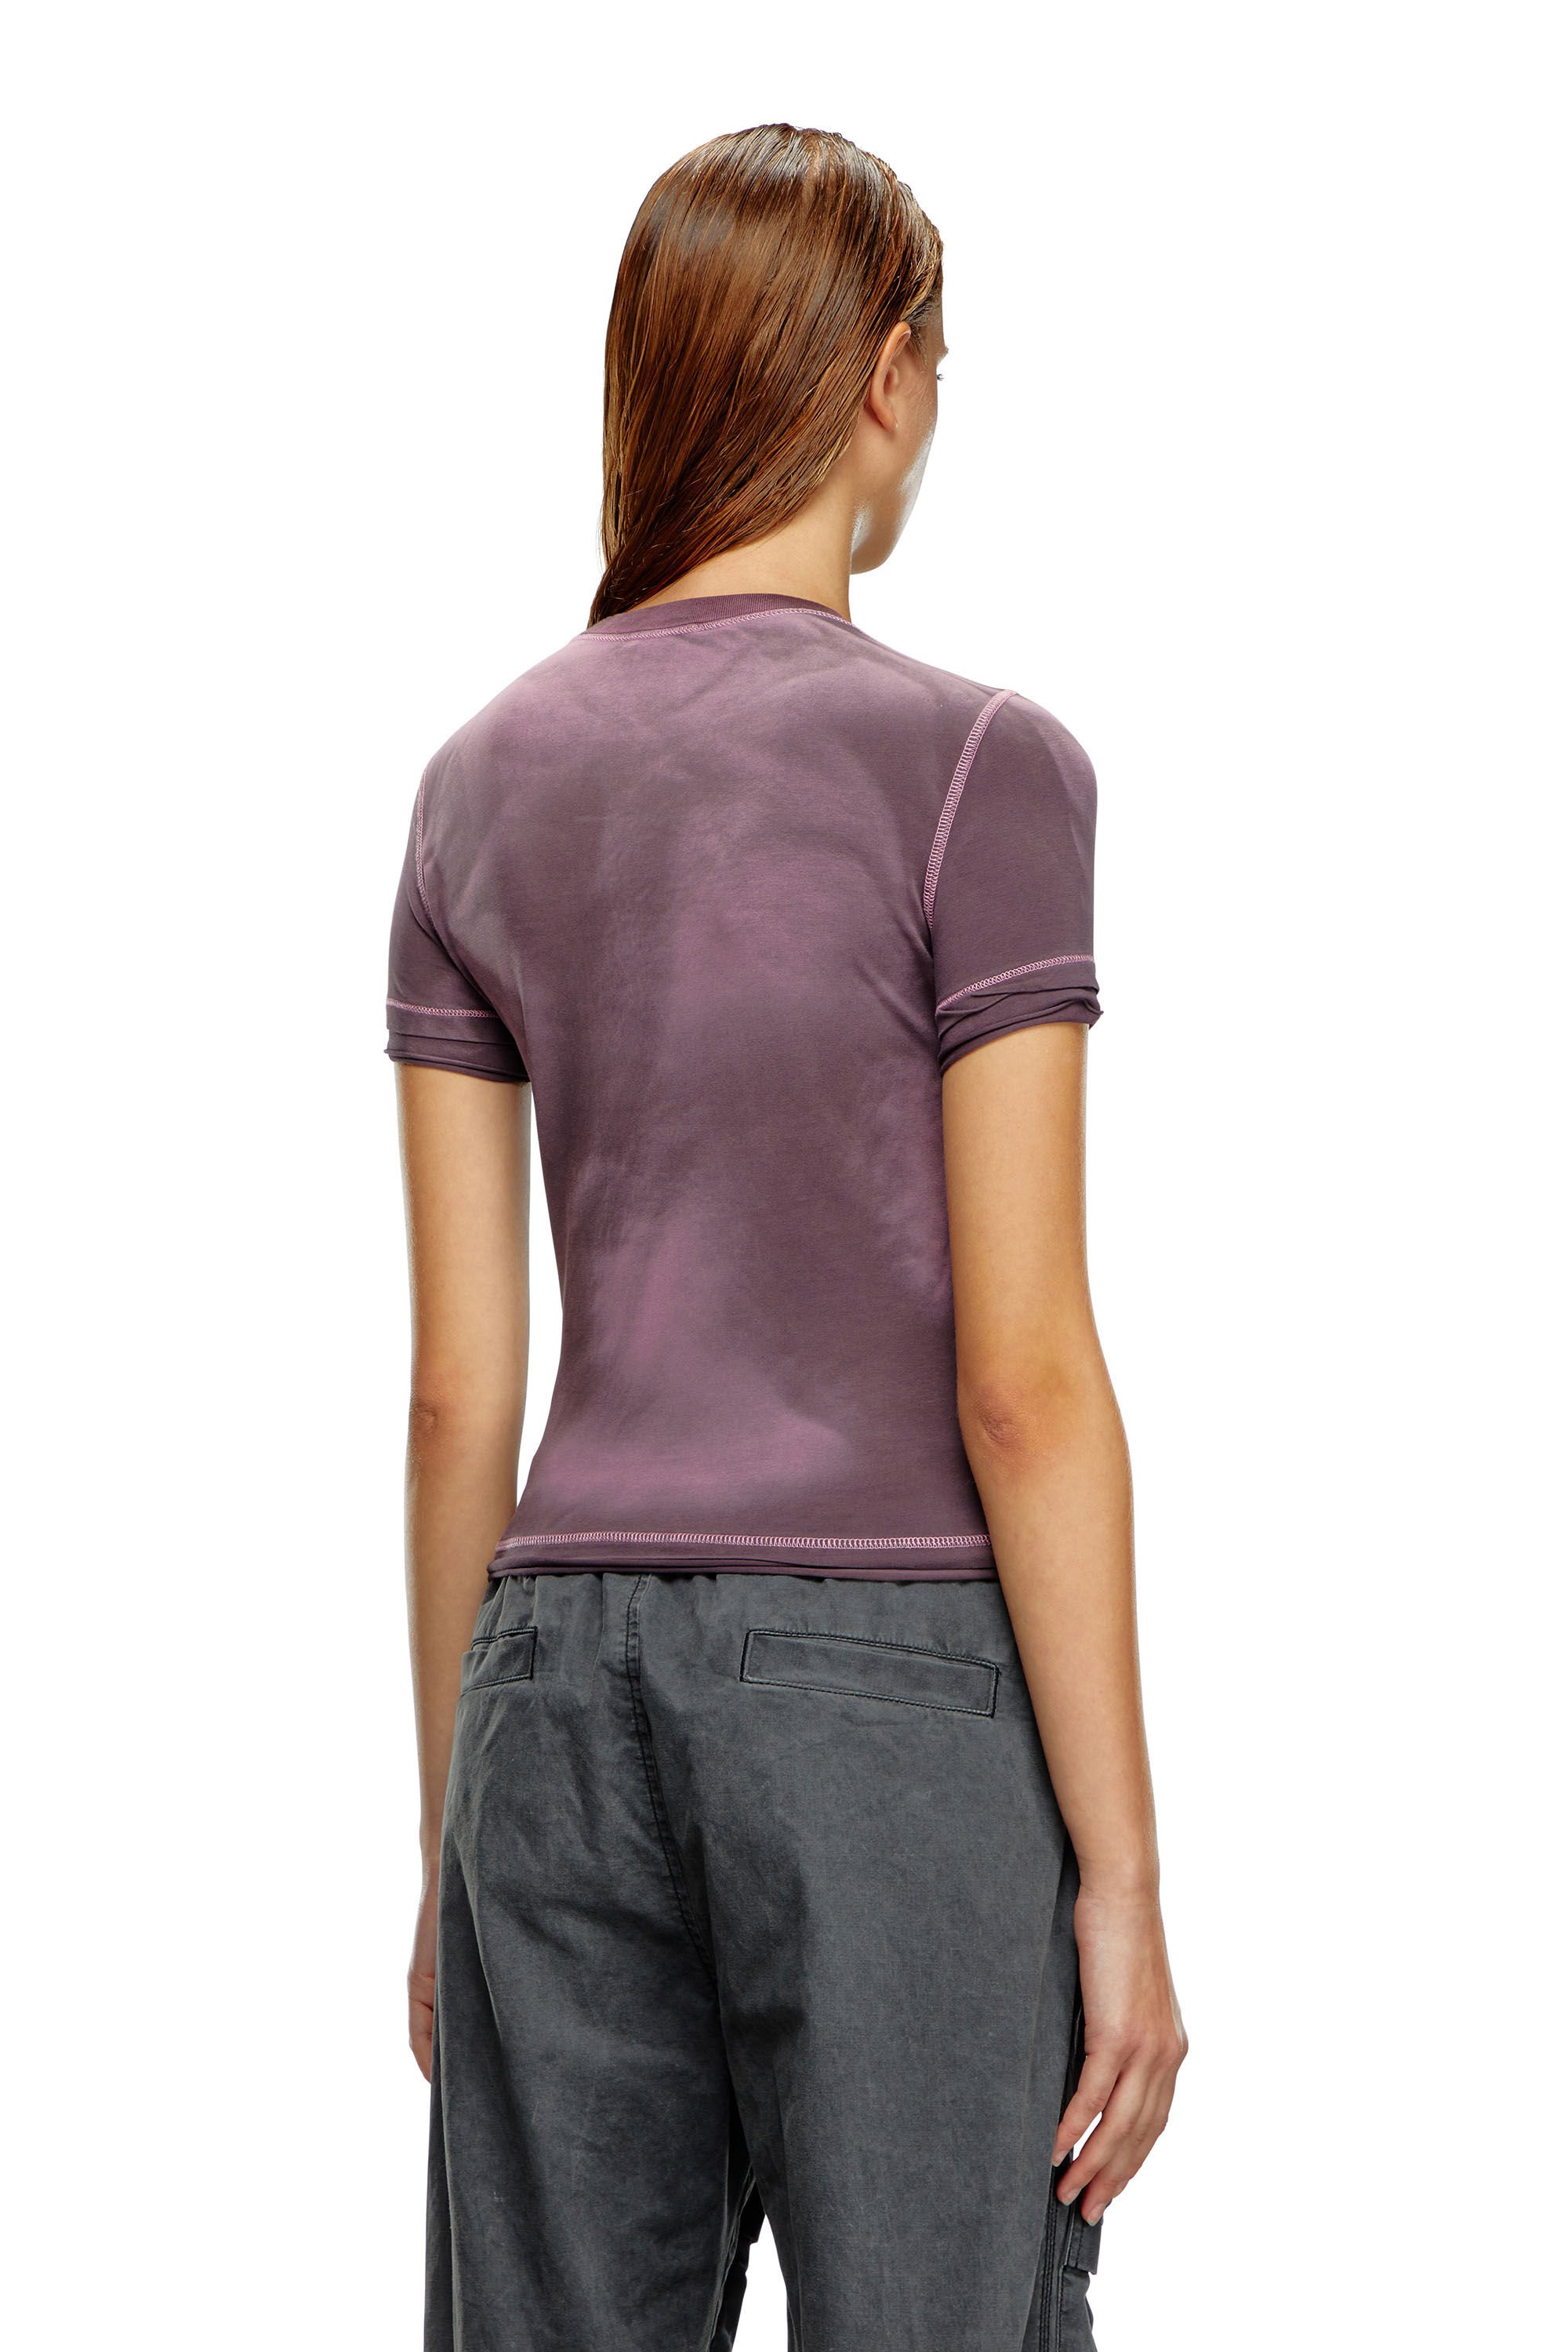 Diesel - T-UNCUT, Donna T-shirt con patch floreali ricamati in Viola - Image 4